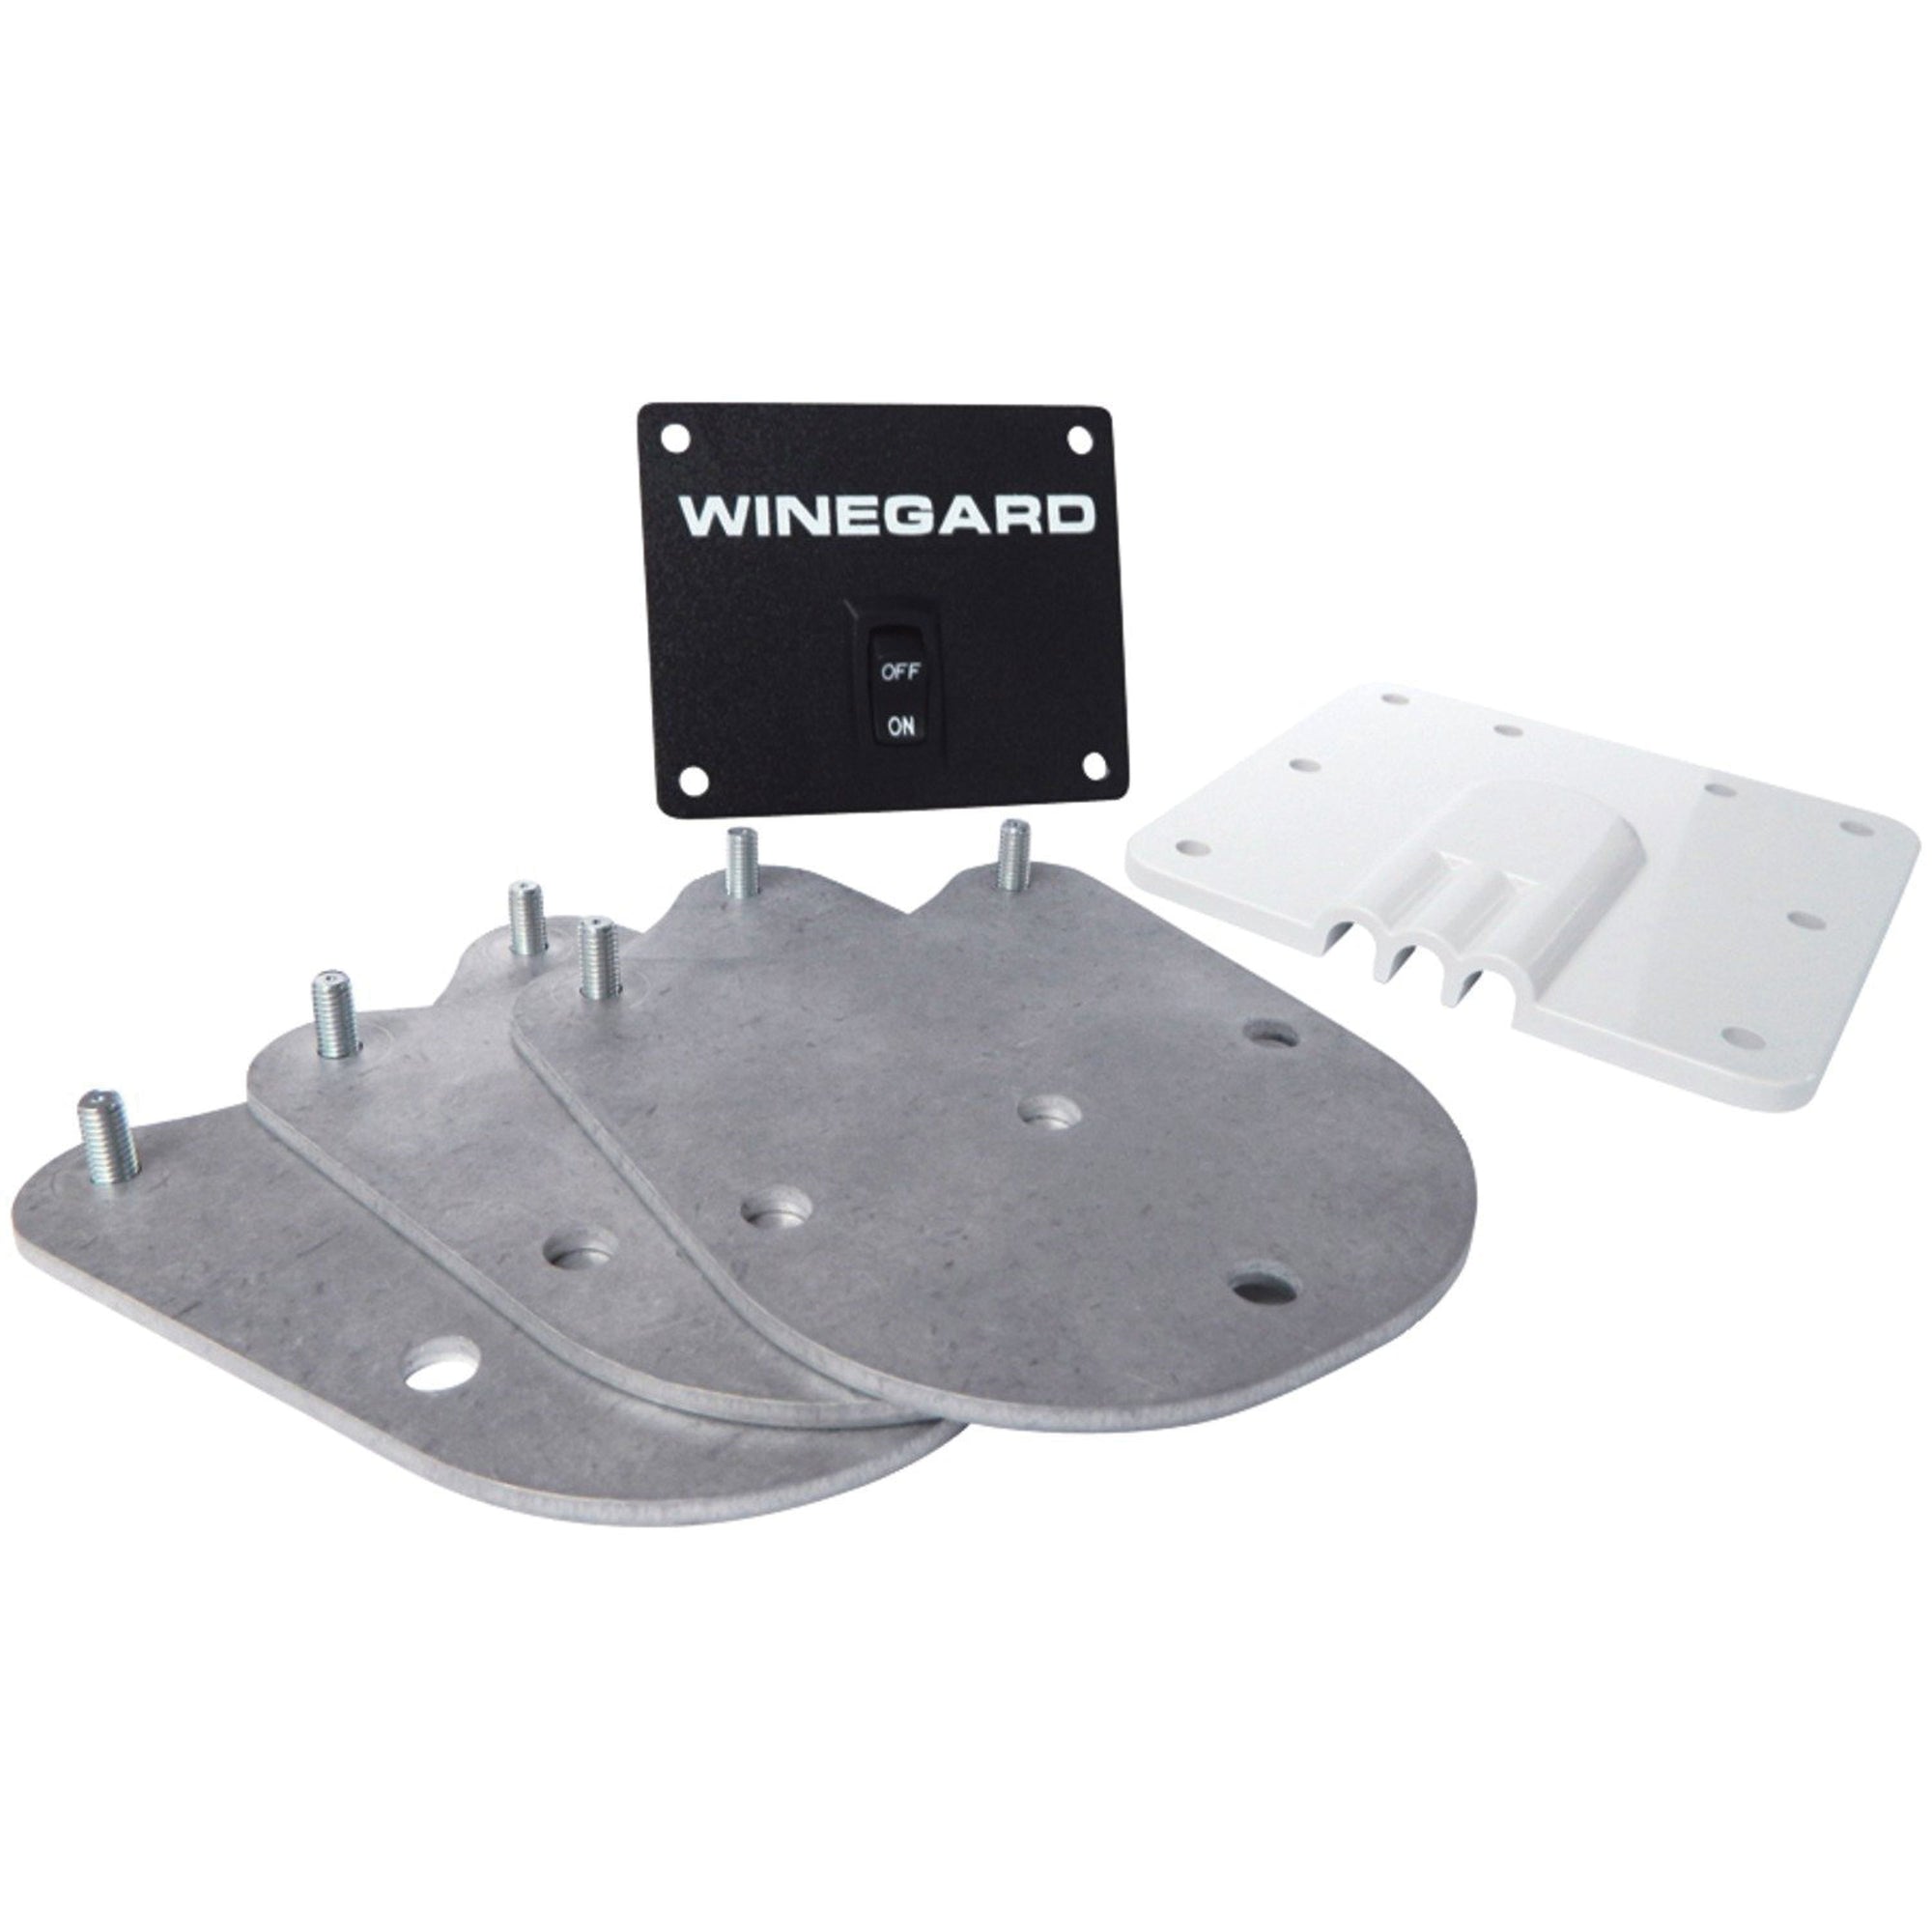 Winegard RK-2000 Carryout Roof Mount Kit